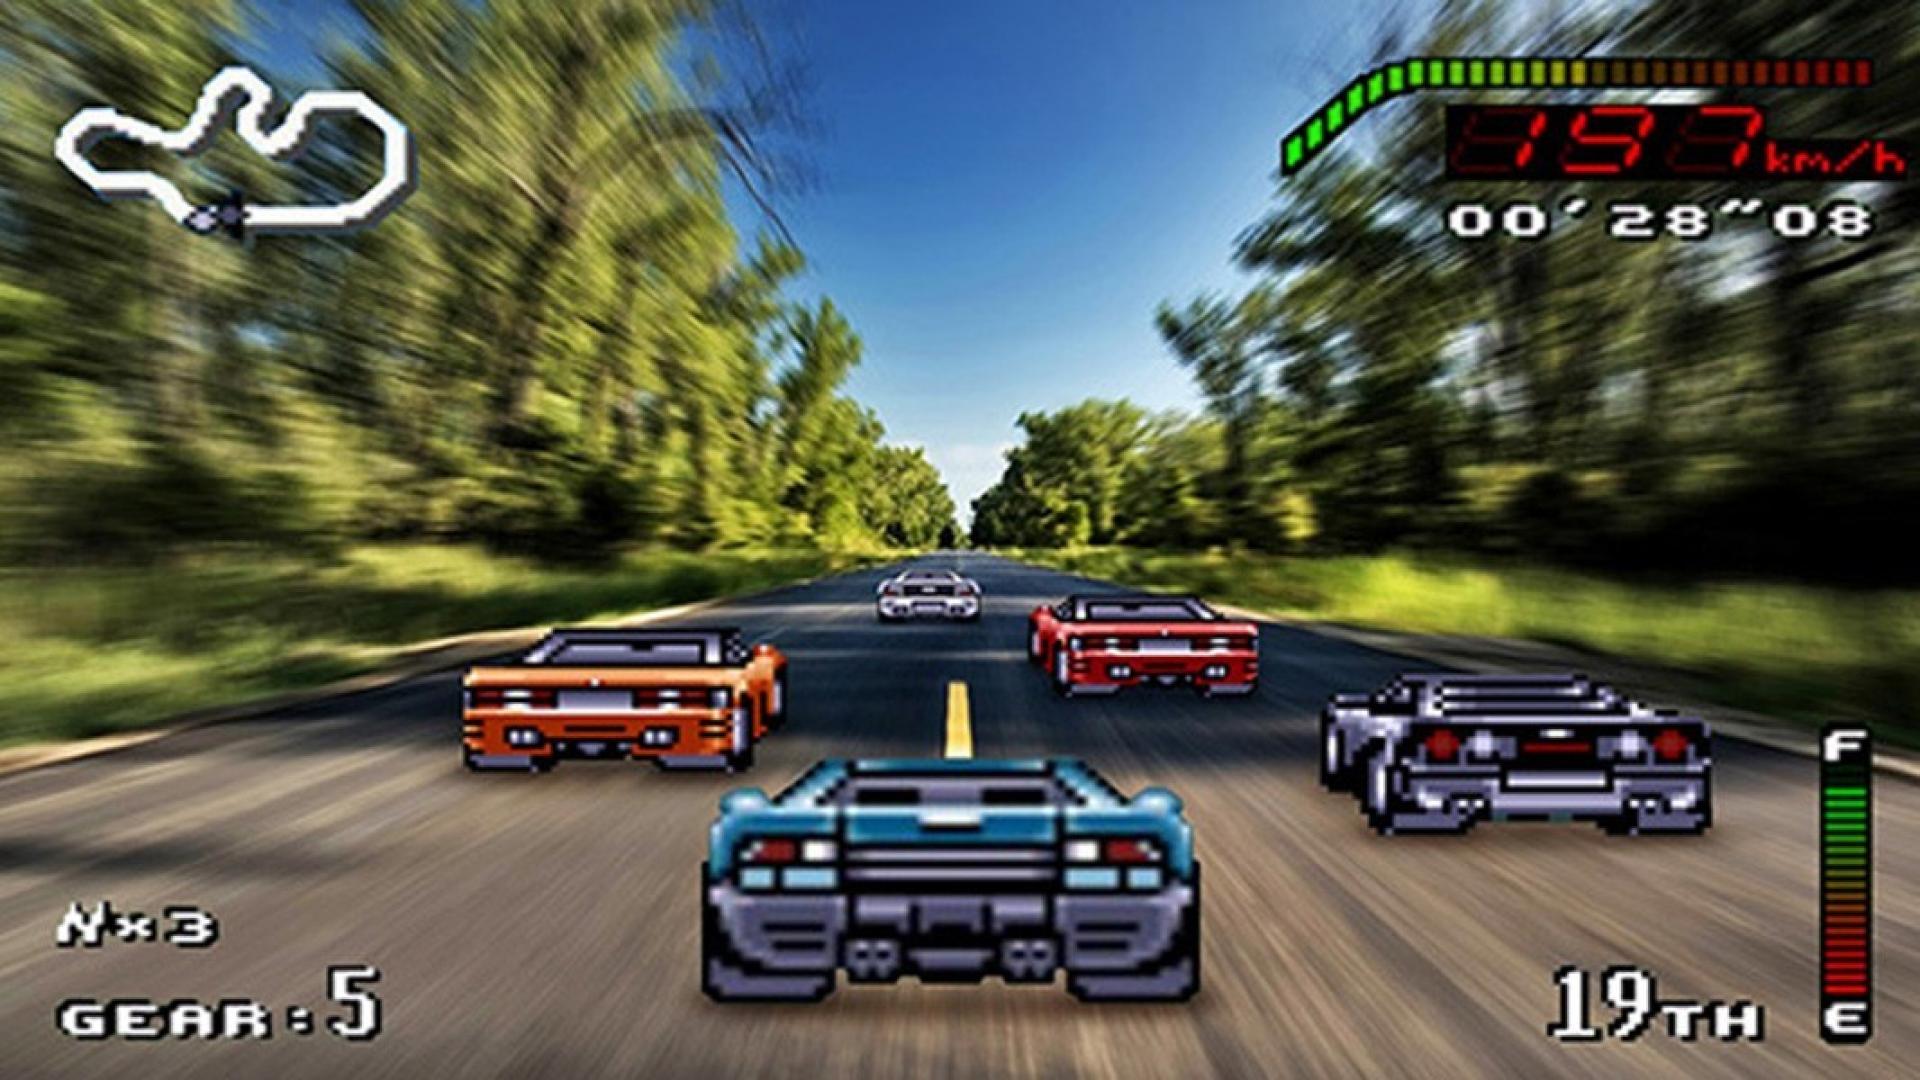 Cars retro games racing 16 bit wallpaper 62892 1920x1080